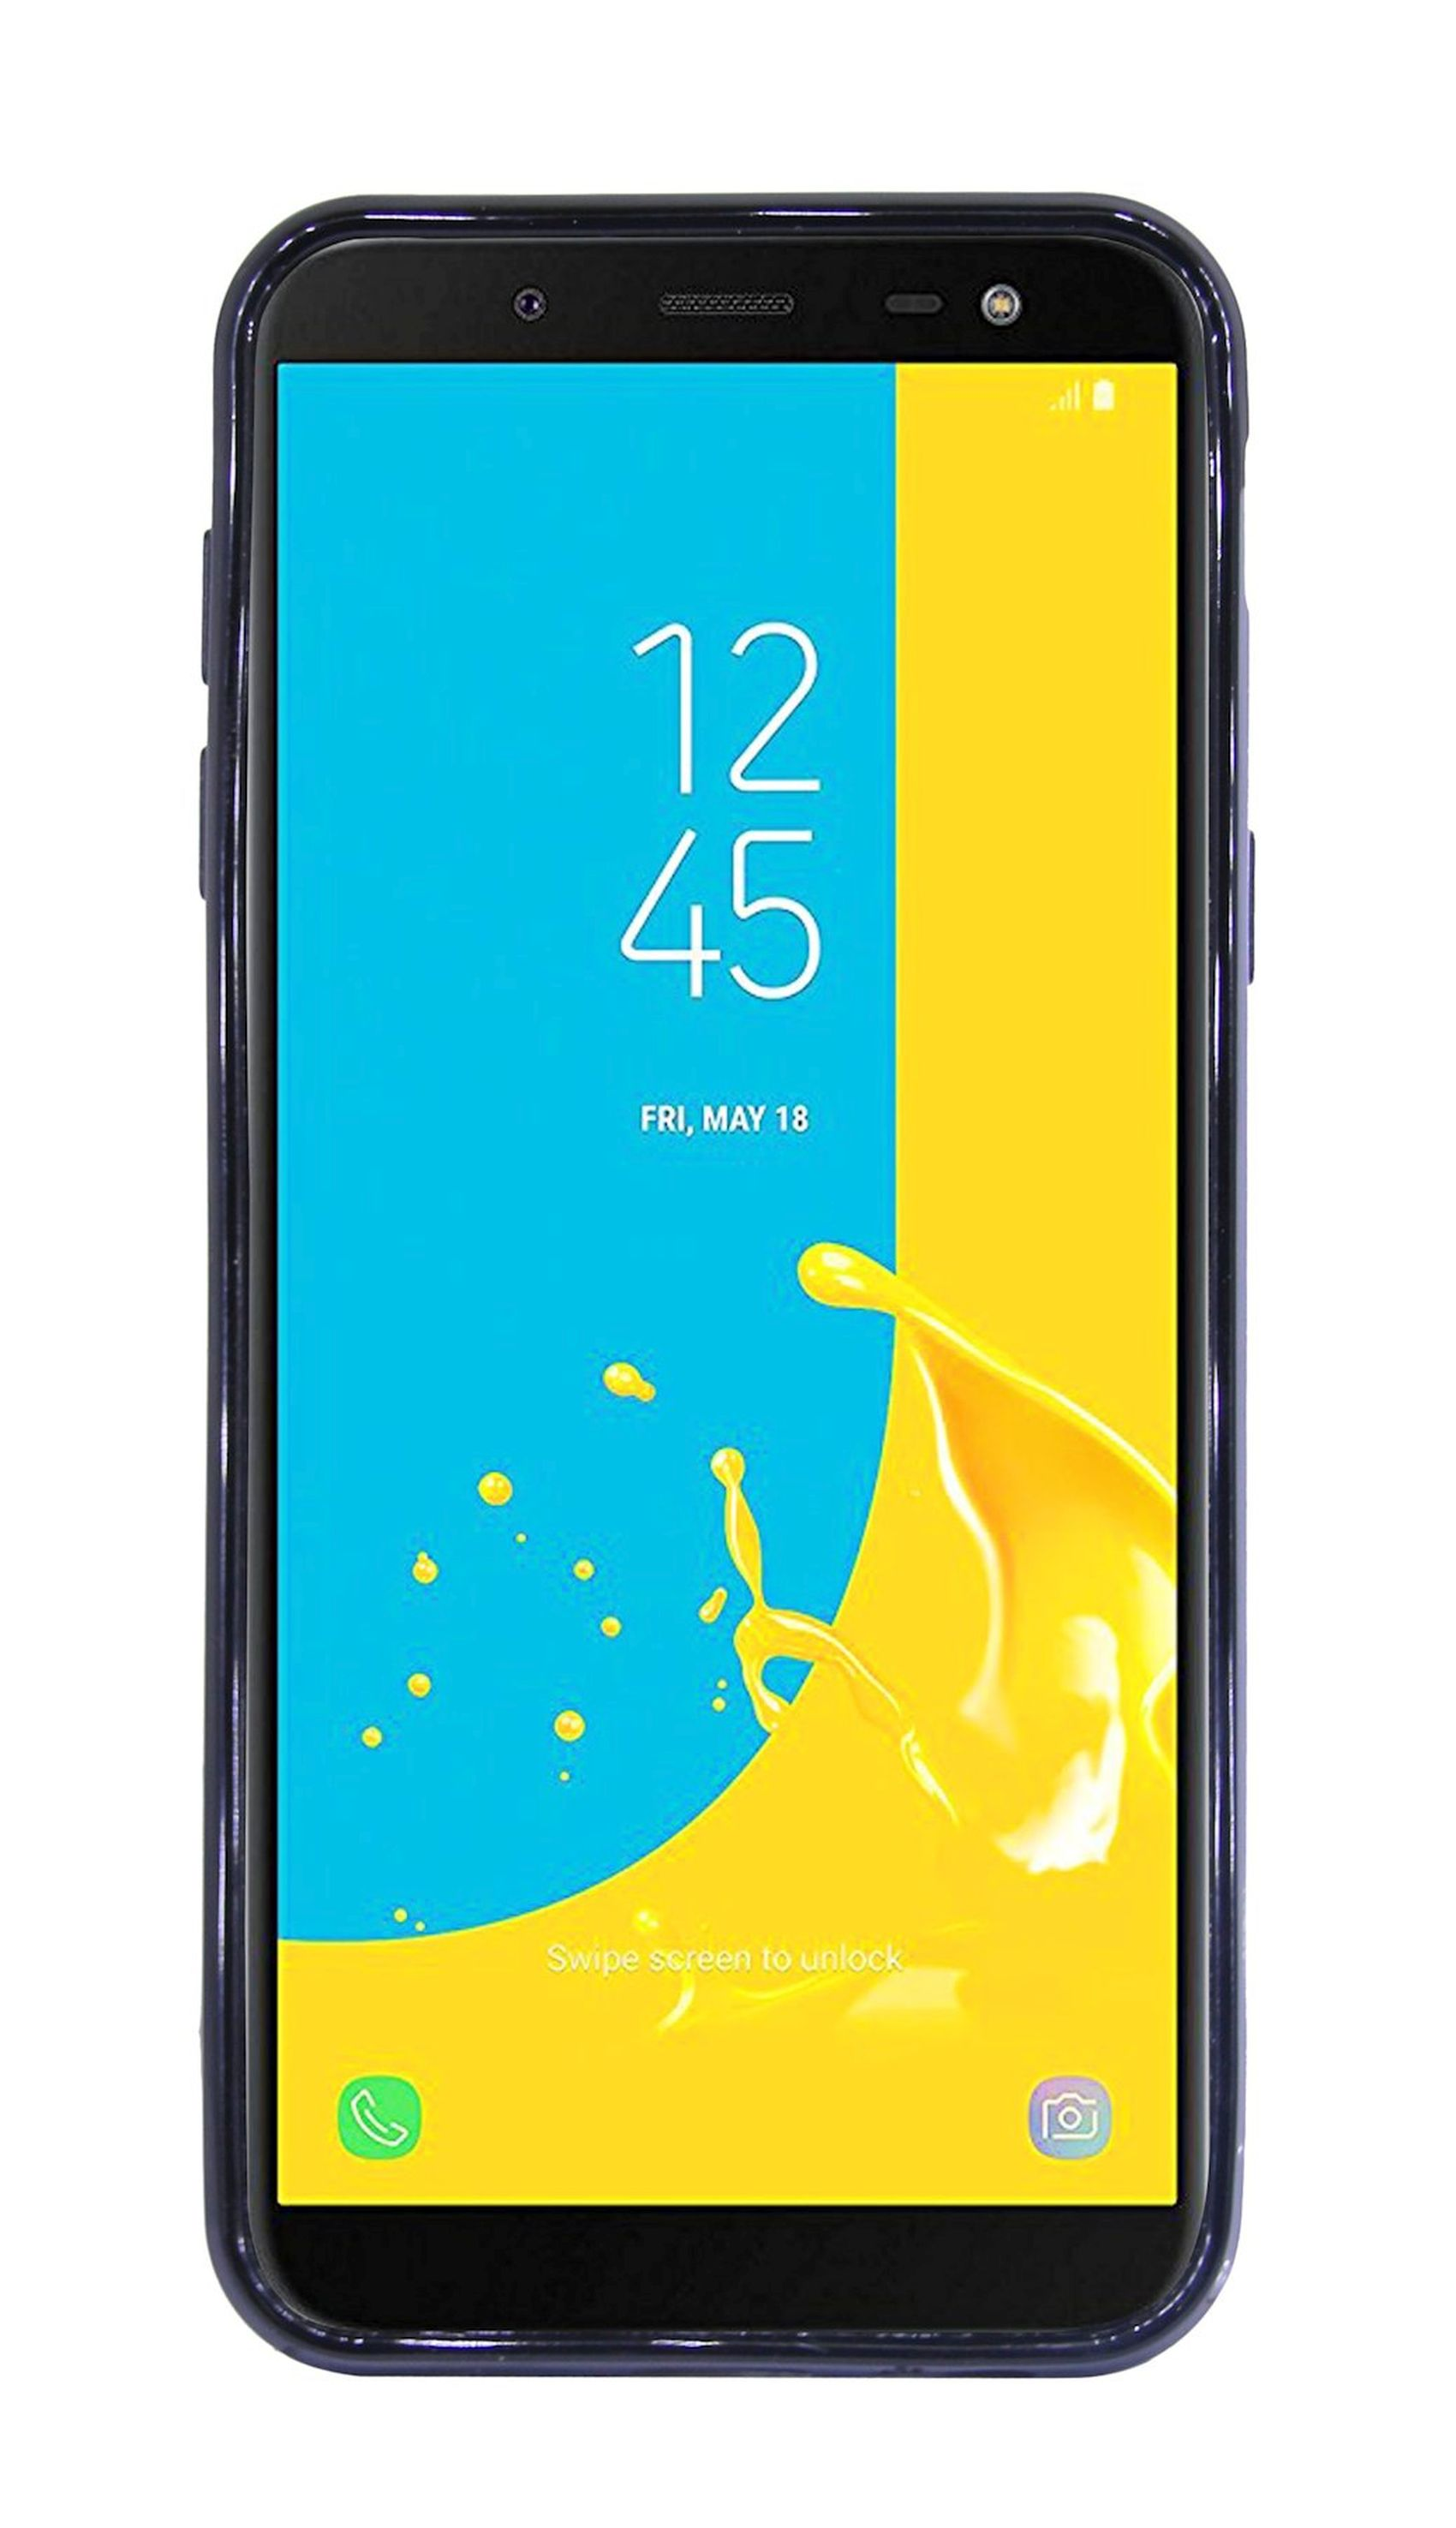 COFI S-Line Cover, Galaxy Schwarz J6 2018, Samsung, Bumper